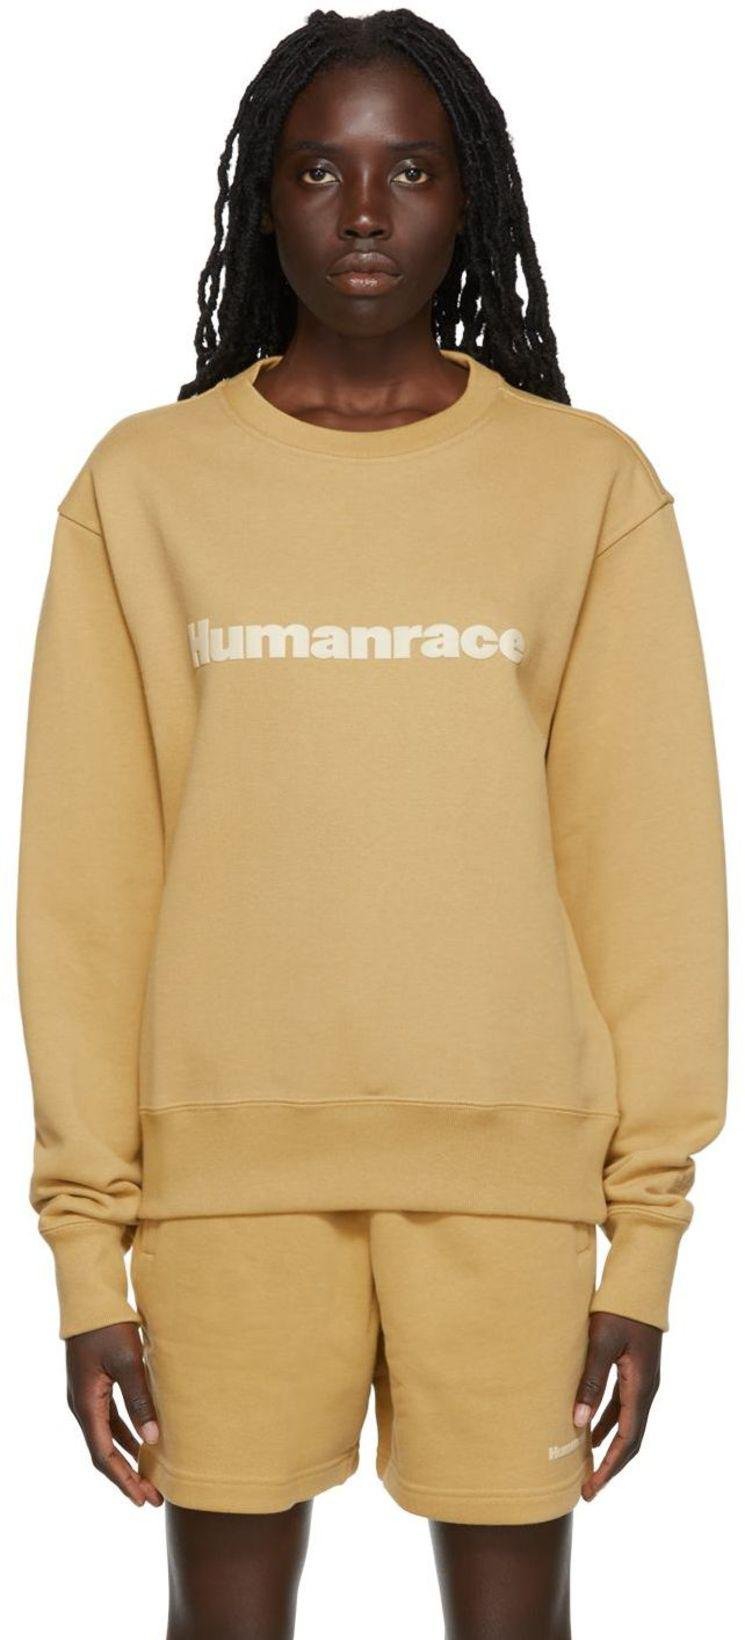 Tan Humanrace Basics Sweatshirt by ADIDAS X HUMANRACE BY PHARRELL WILLIAMS